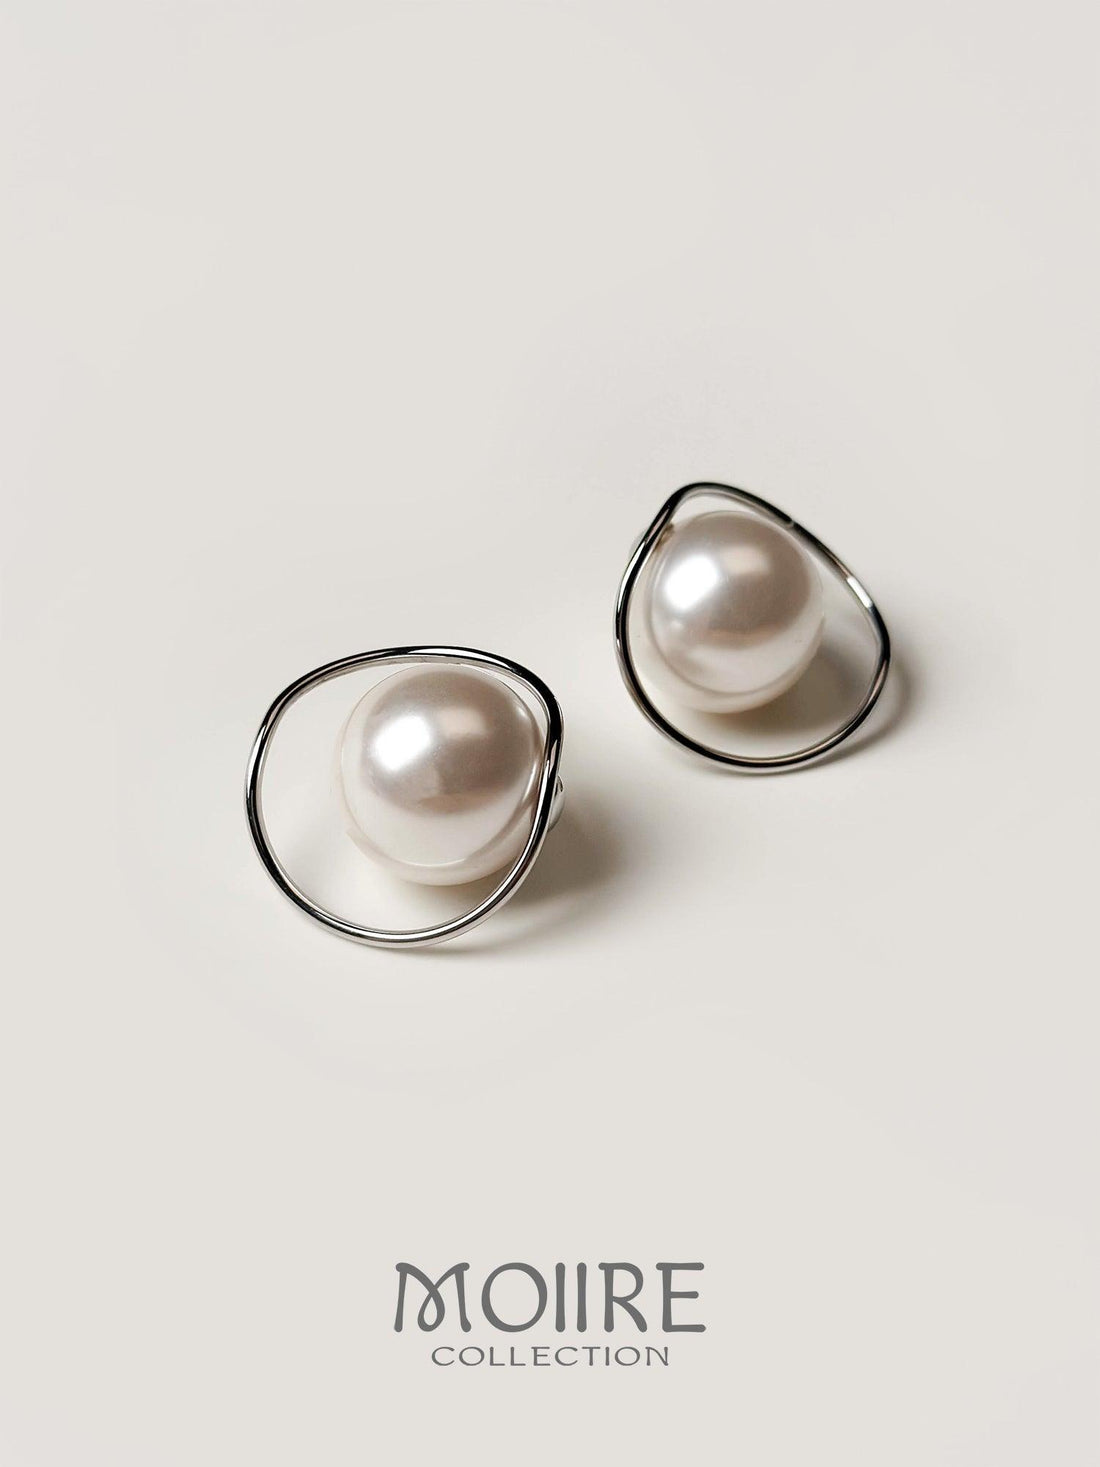 Moiire 精選 | 人魚的眼淚 - Moiire Collection